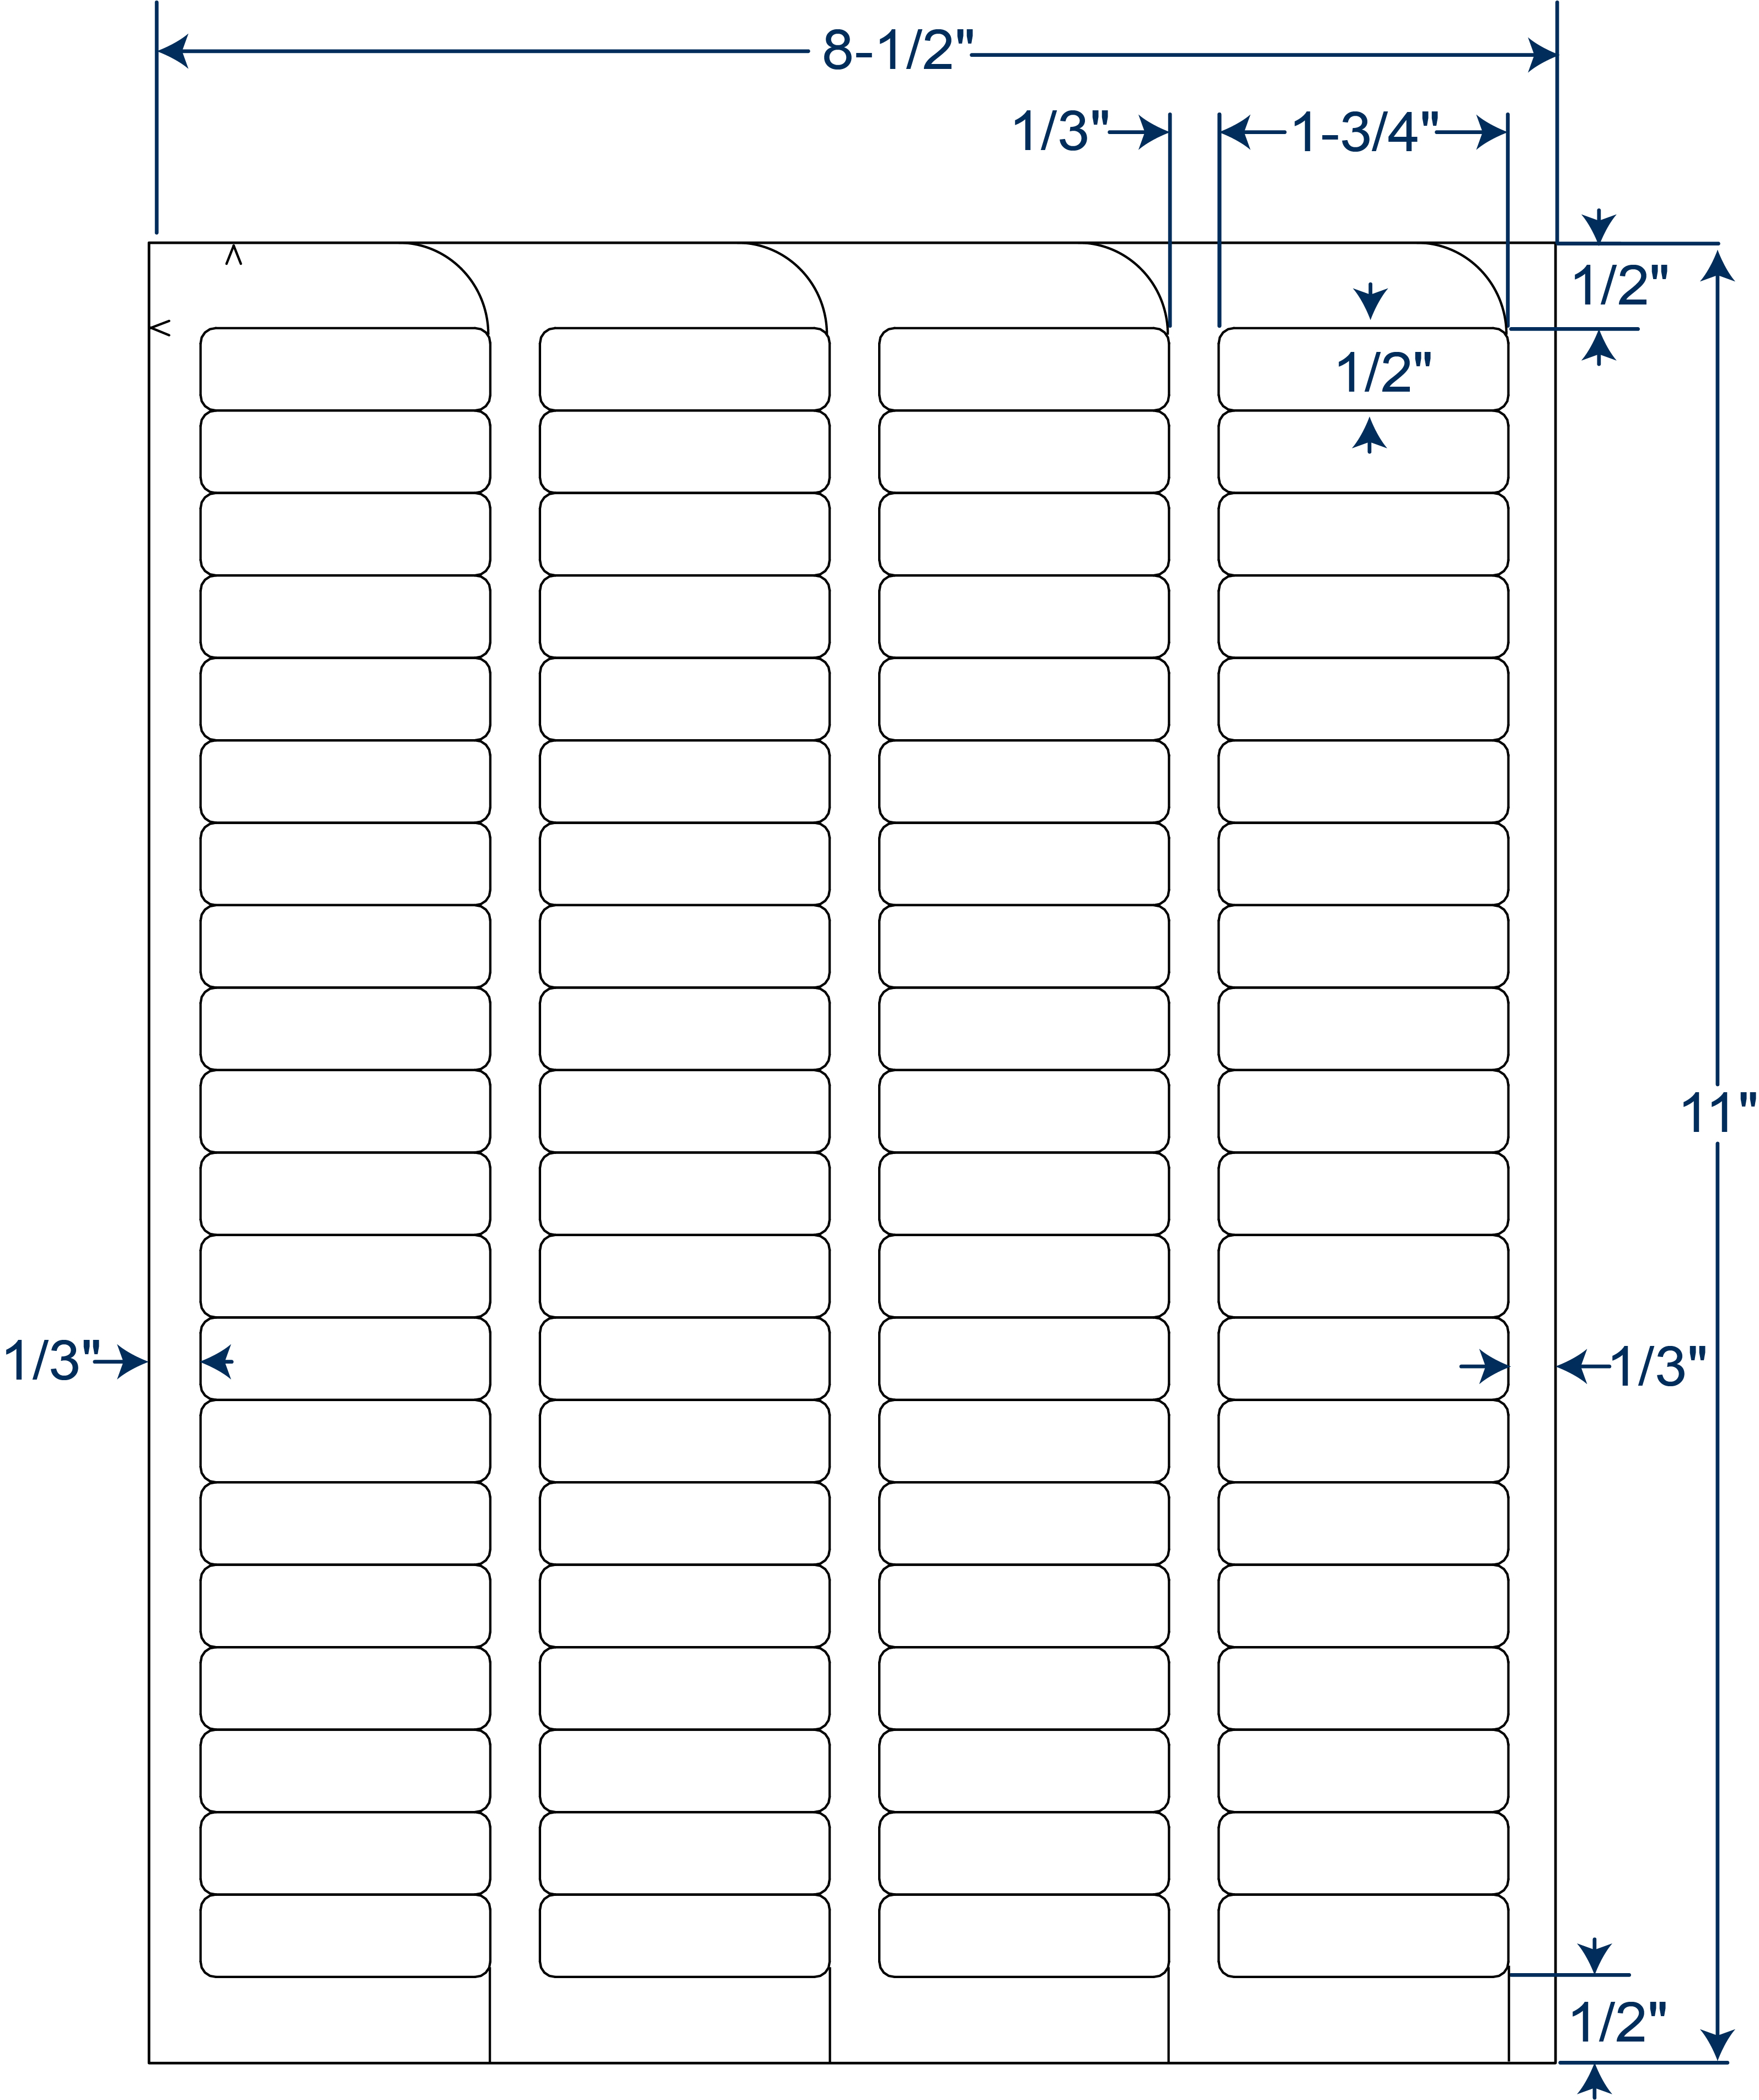 1-3/4" x 1/2" FABTab‰ã¢ Sheeted Labels (250 sheets)